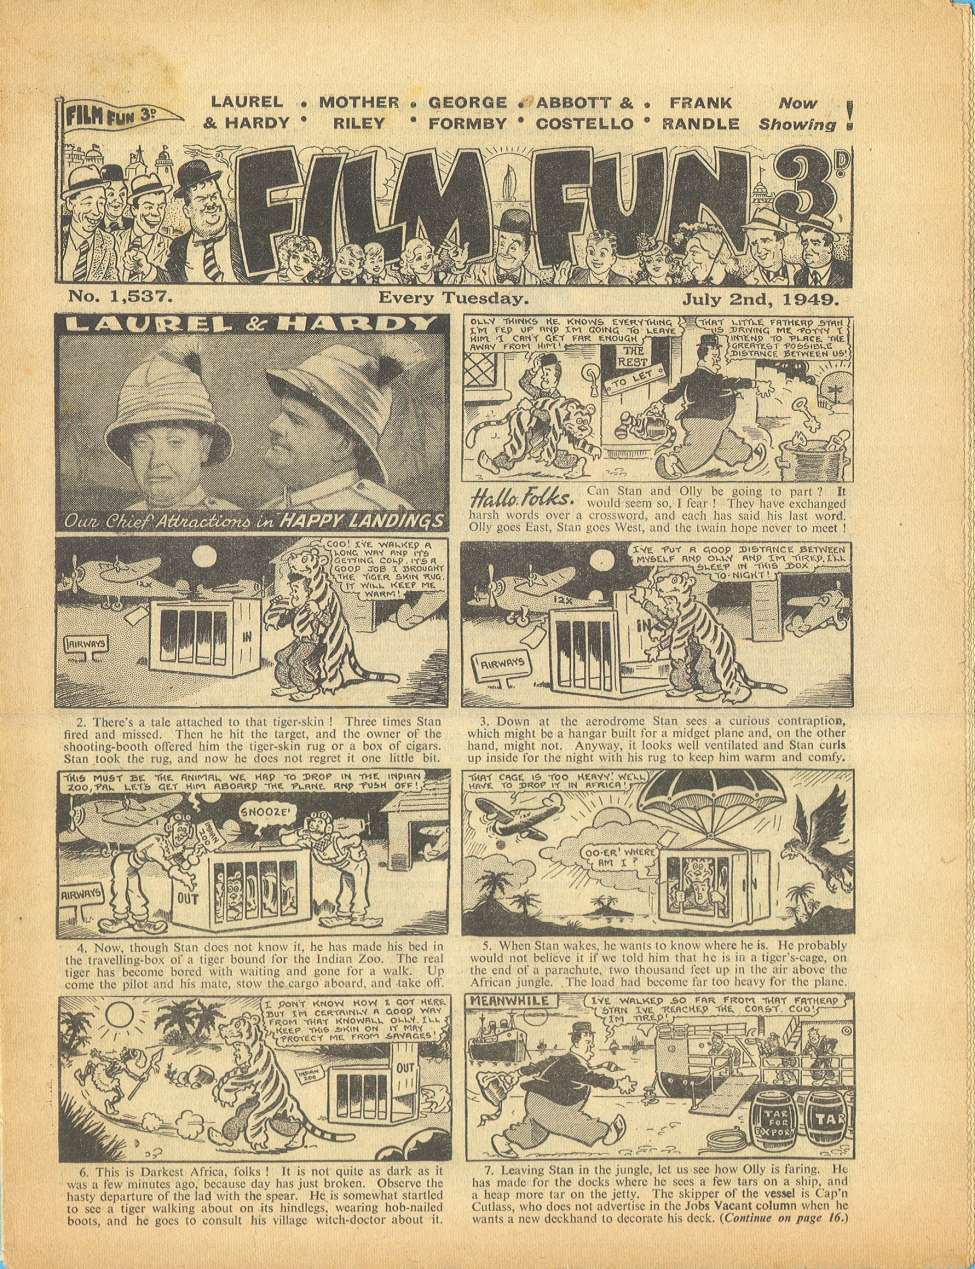 Film Fun Comic Number 1537 July 2nd 1949